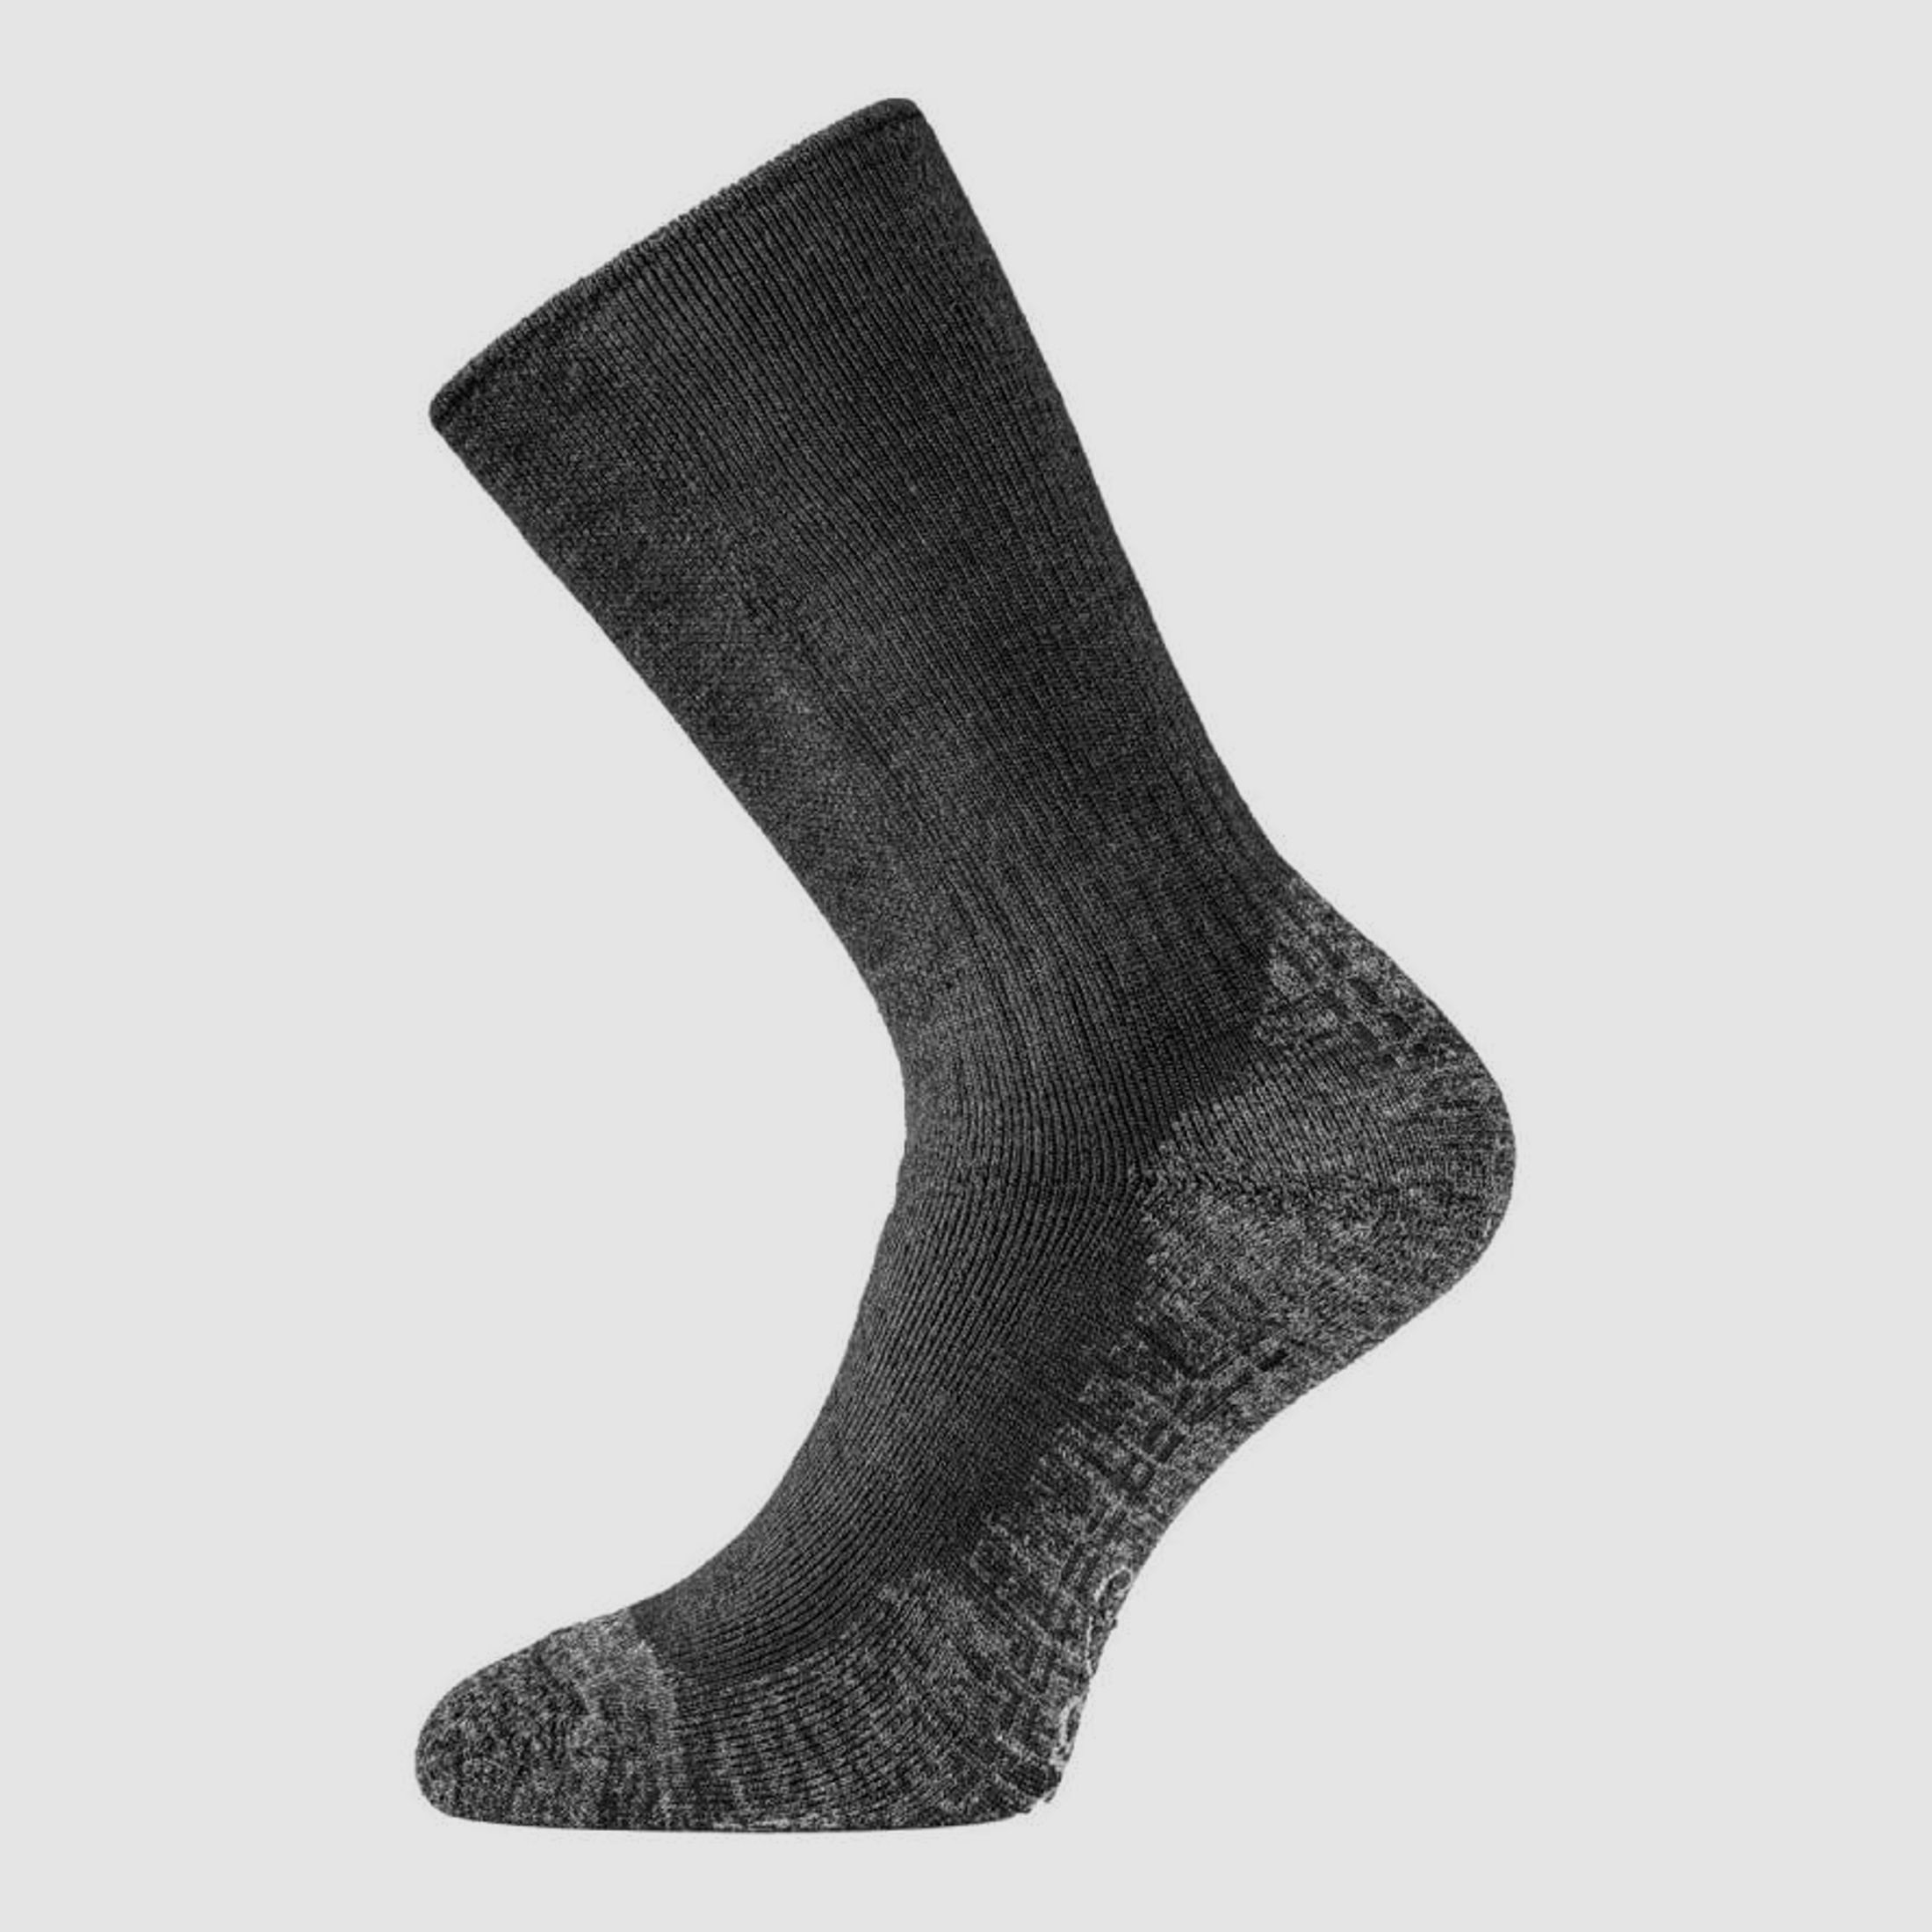 Lasting Warme Merino WSM Trekking-Socken Dunkelgrau    S (EU 34-37)